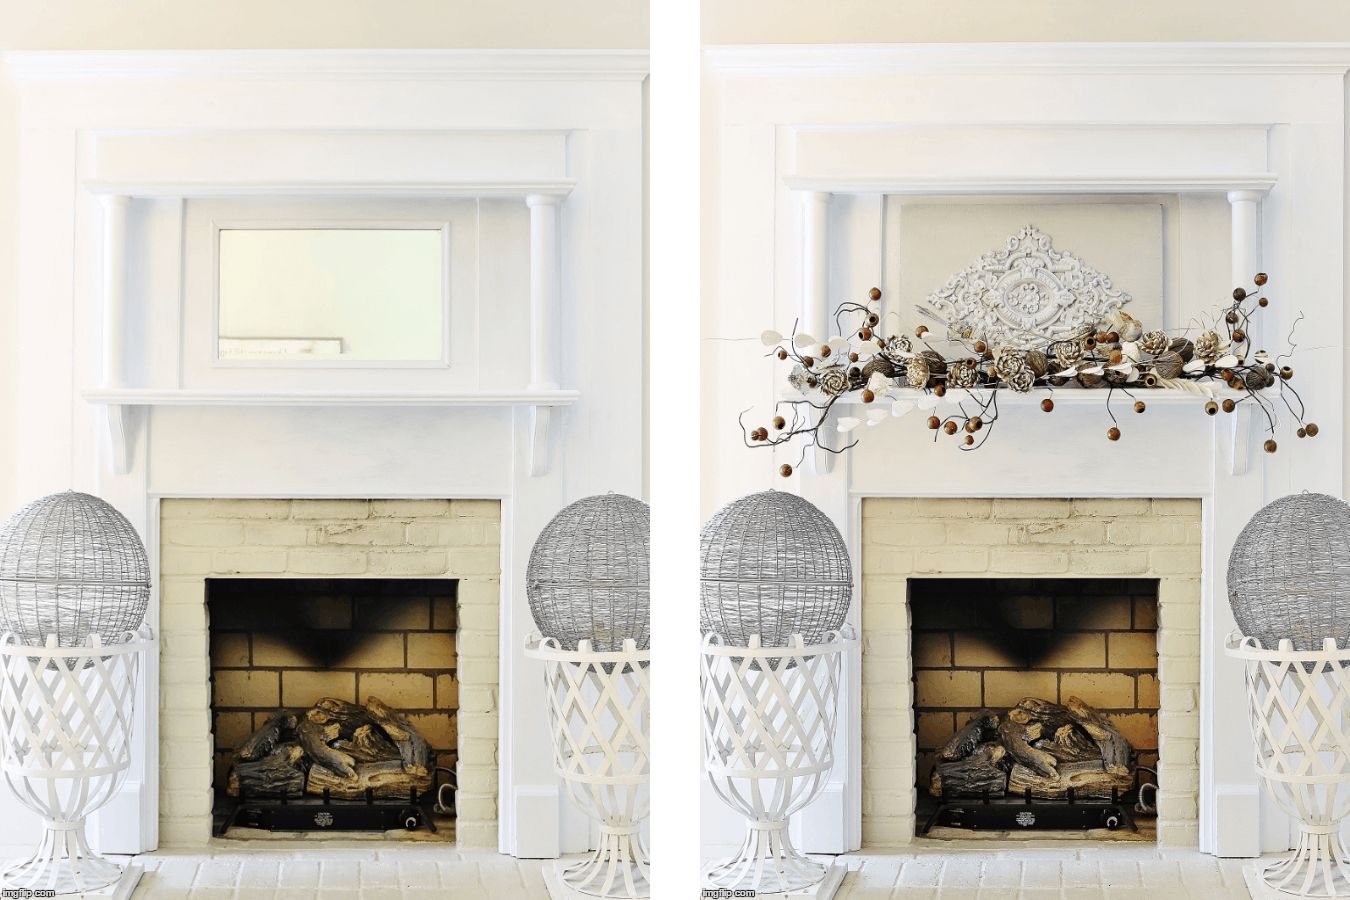 Diy Fireplace Mantel Ideas Awesome 35 Beautiful Fall Mantel Decorating Ideas